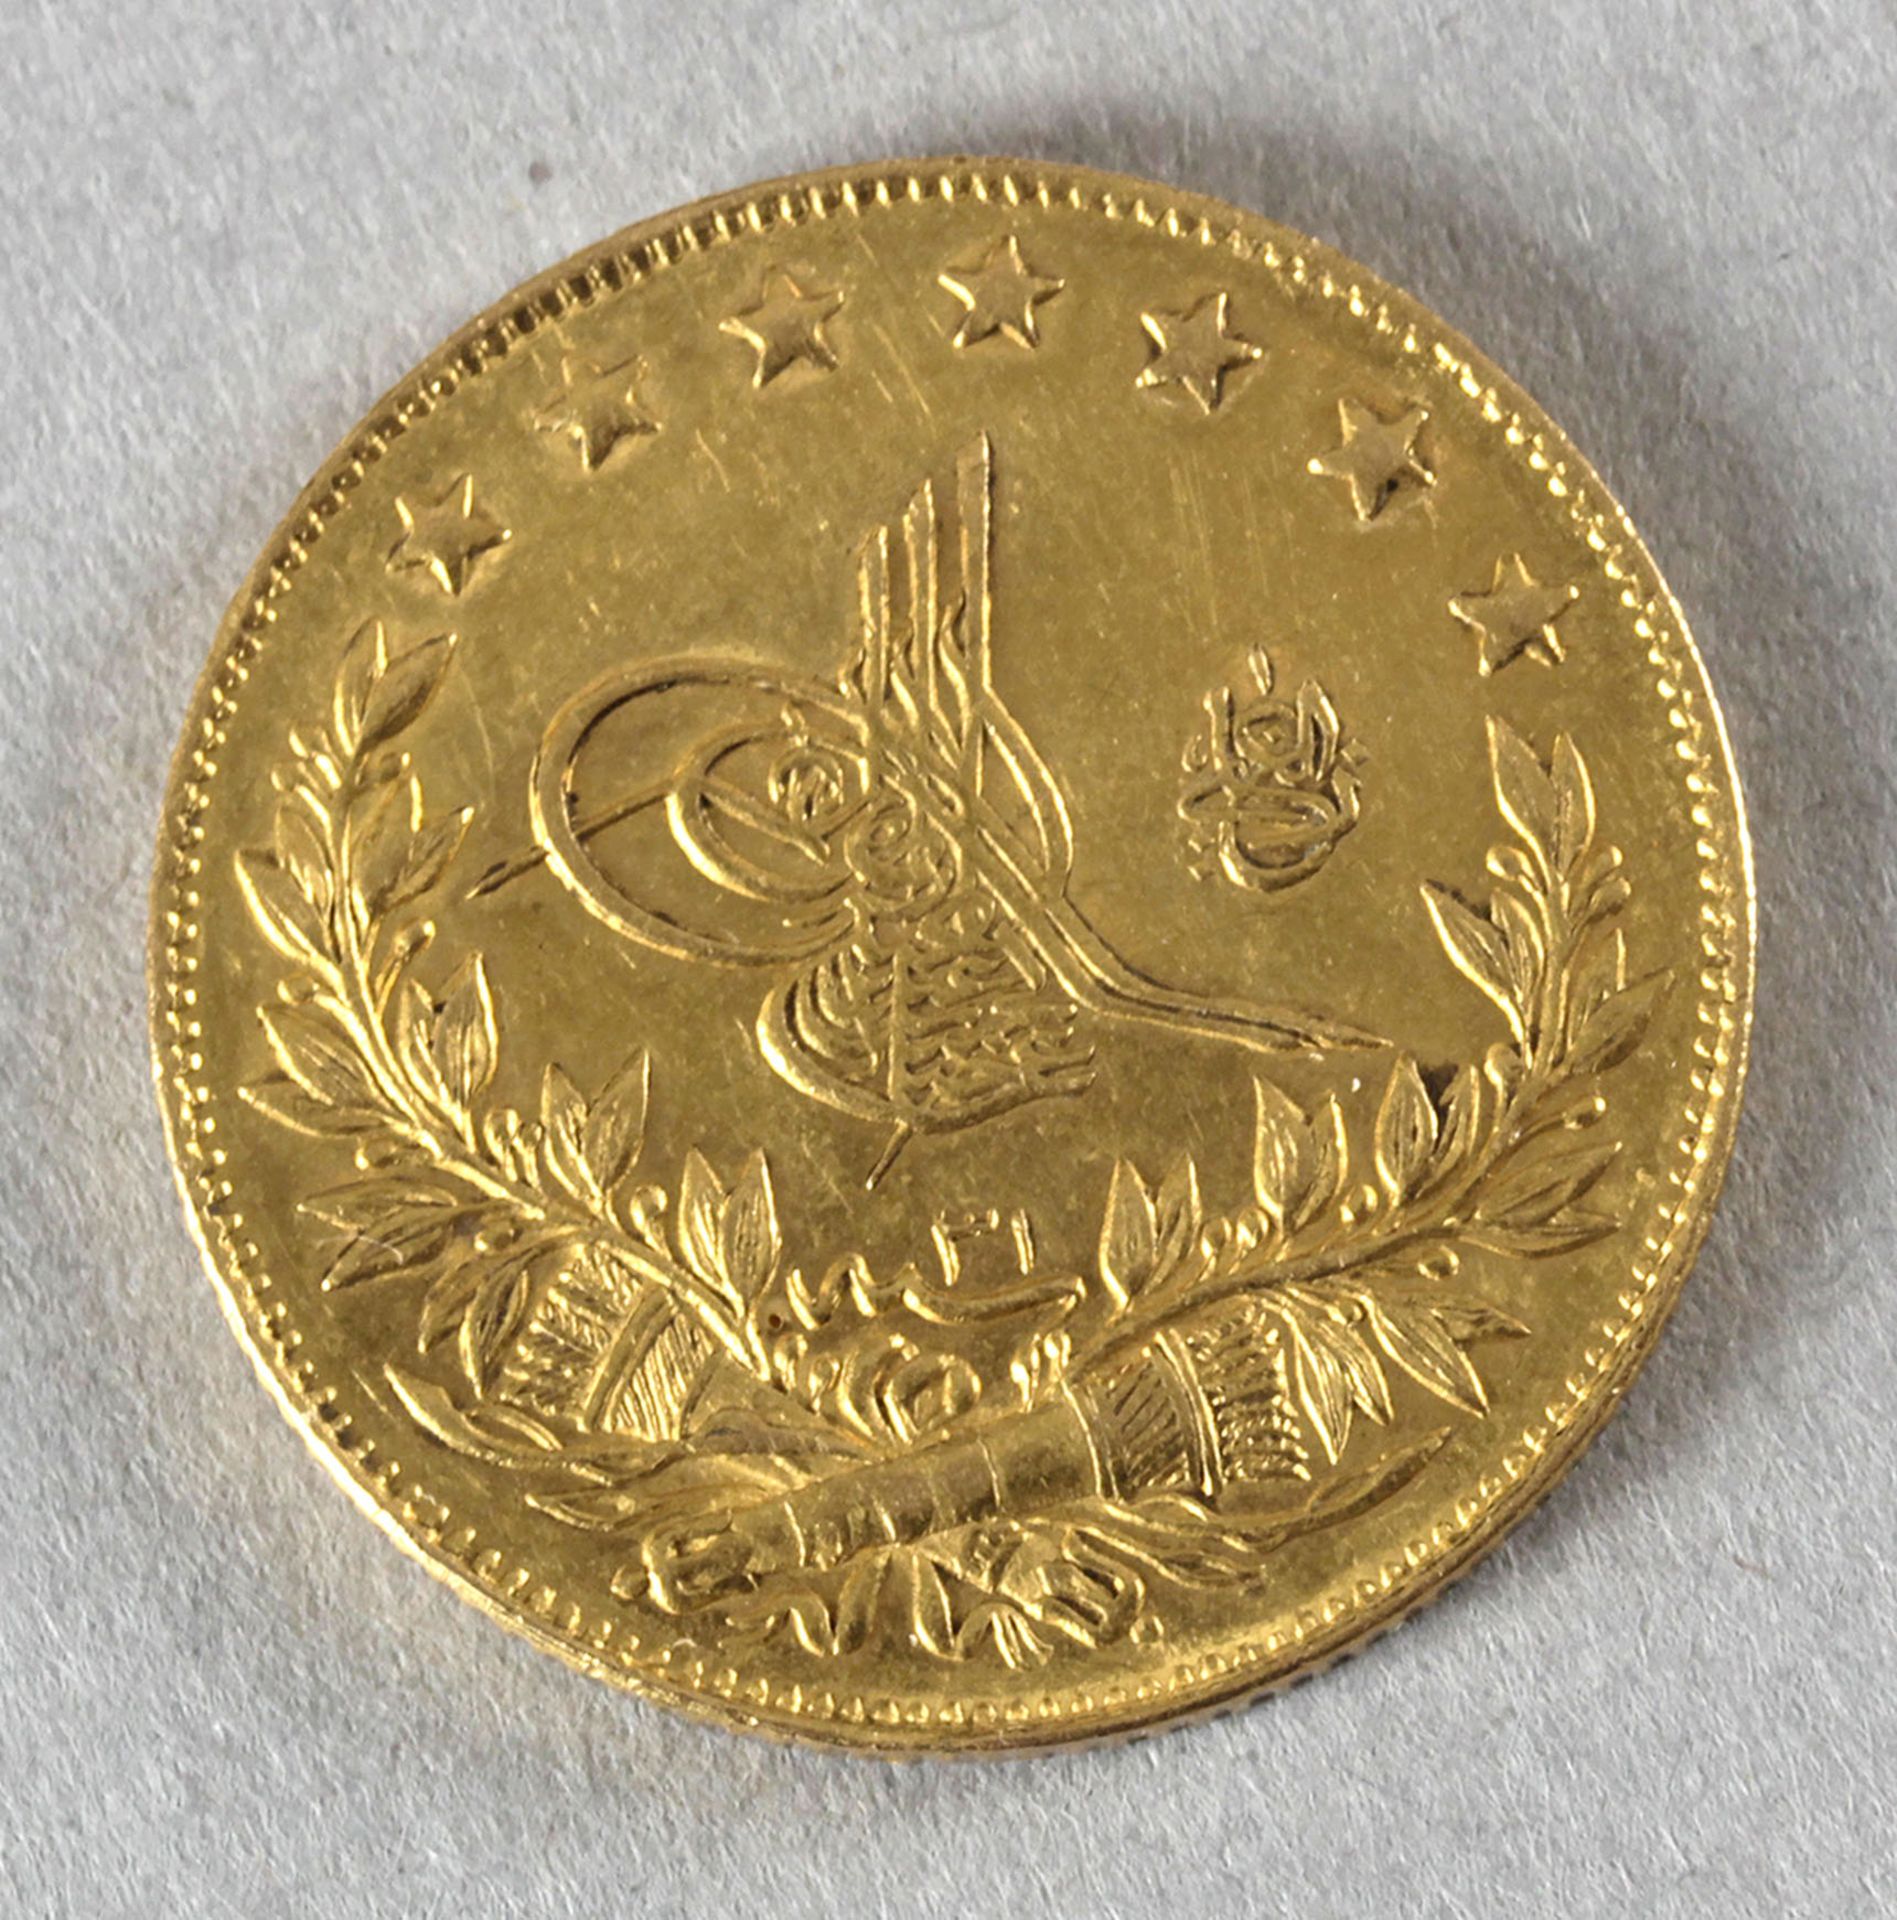 Goldmünze, 100 Kurush (Piaster), Osmanisches Reich, 1907 (1293), Tughra